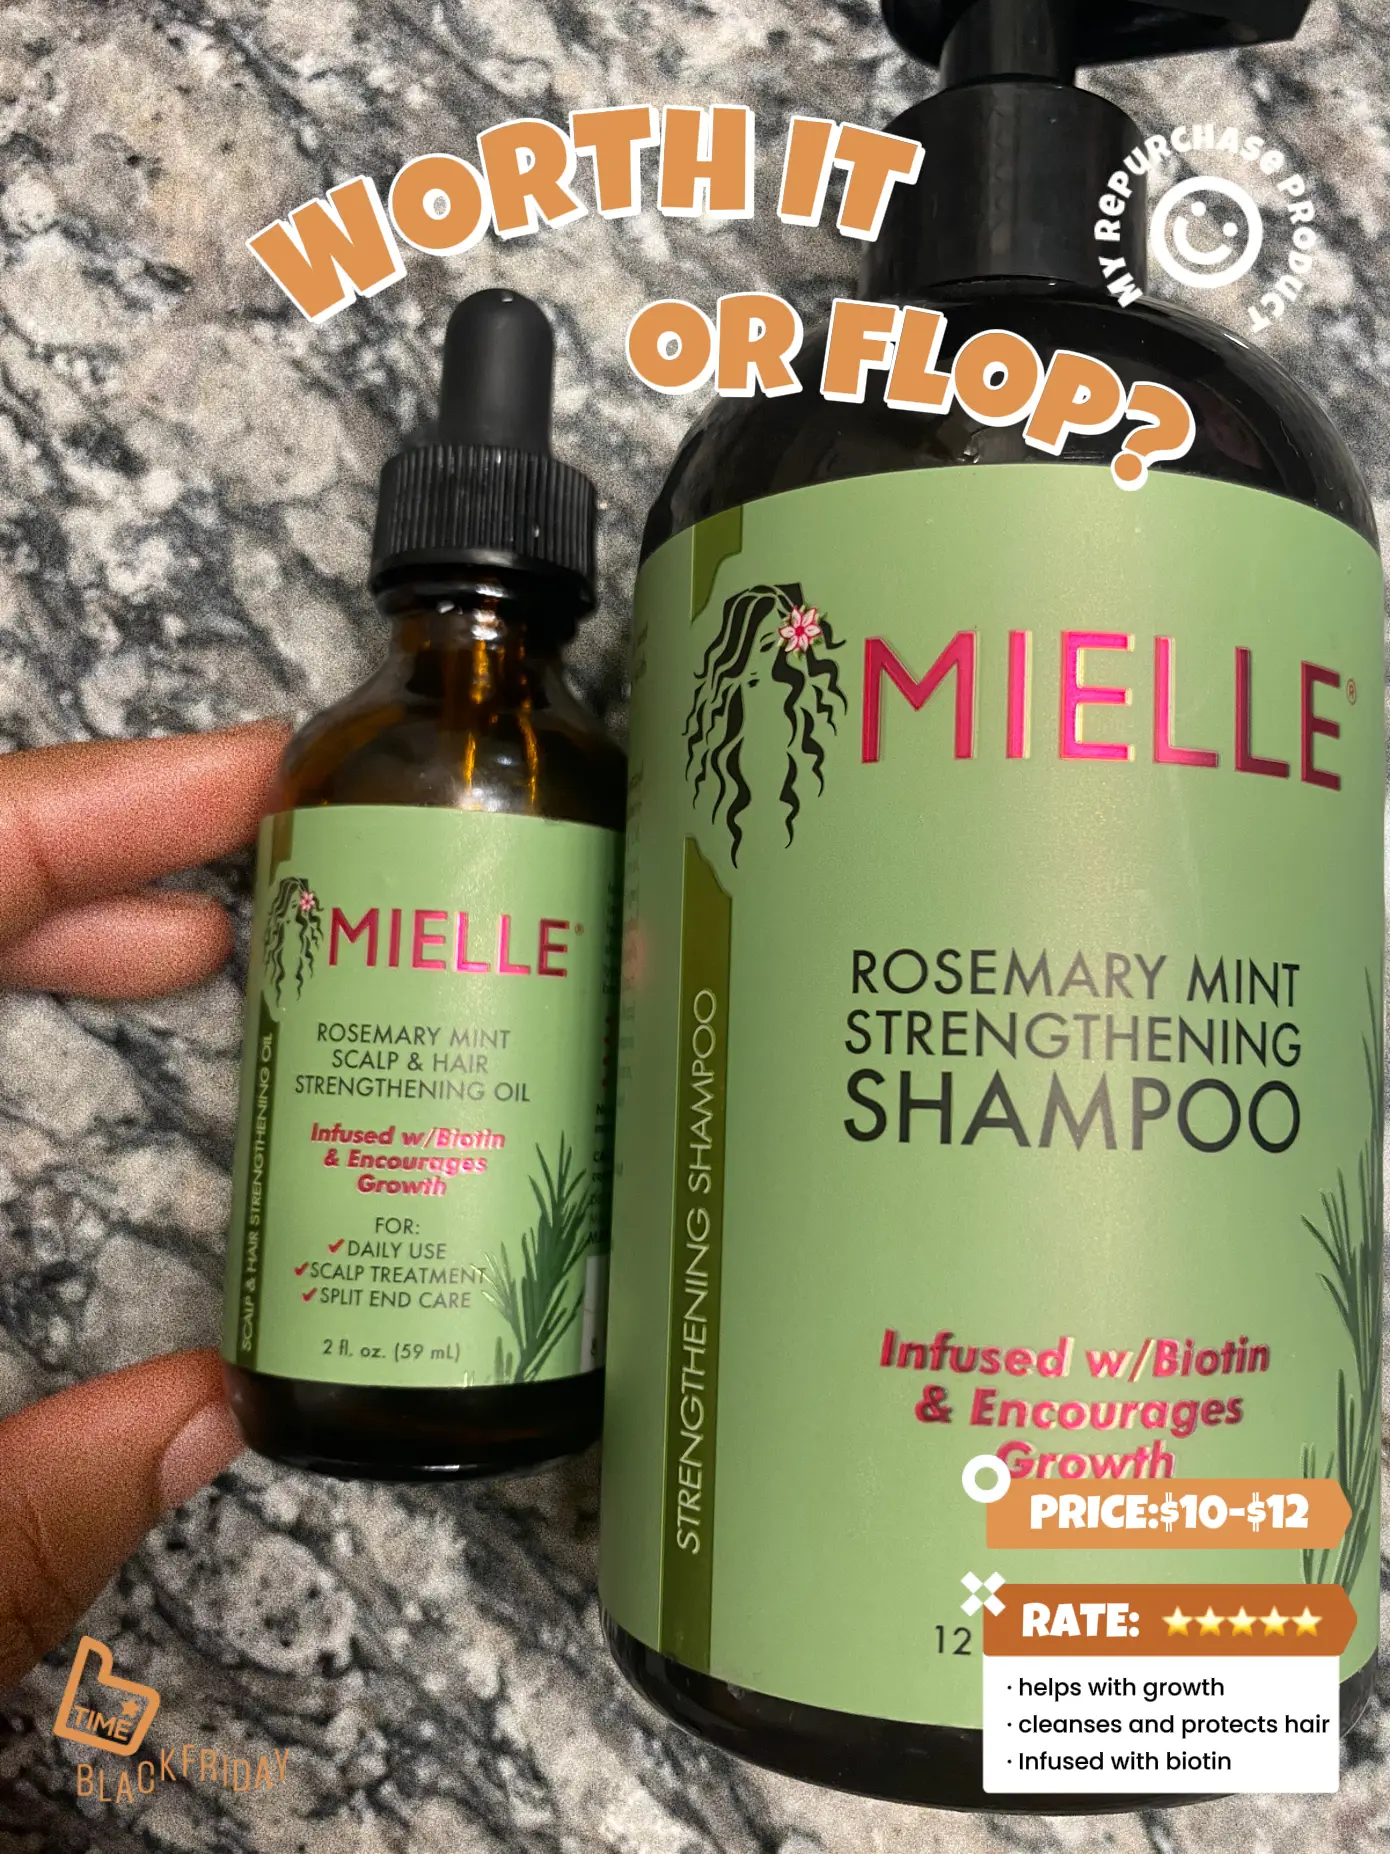  A bottle of Mielle hair shampoo and a bottle of Mielle hair